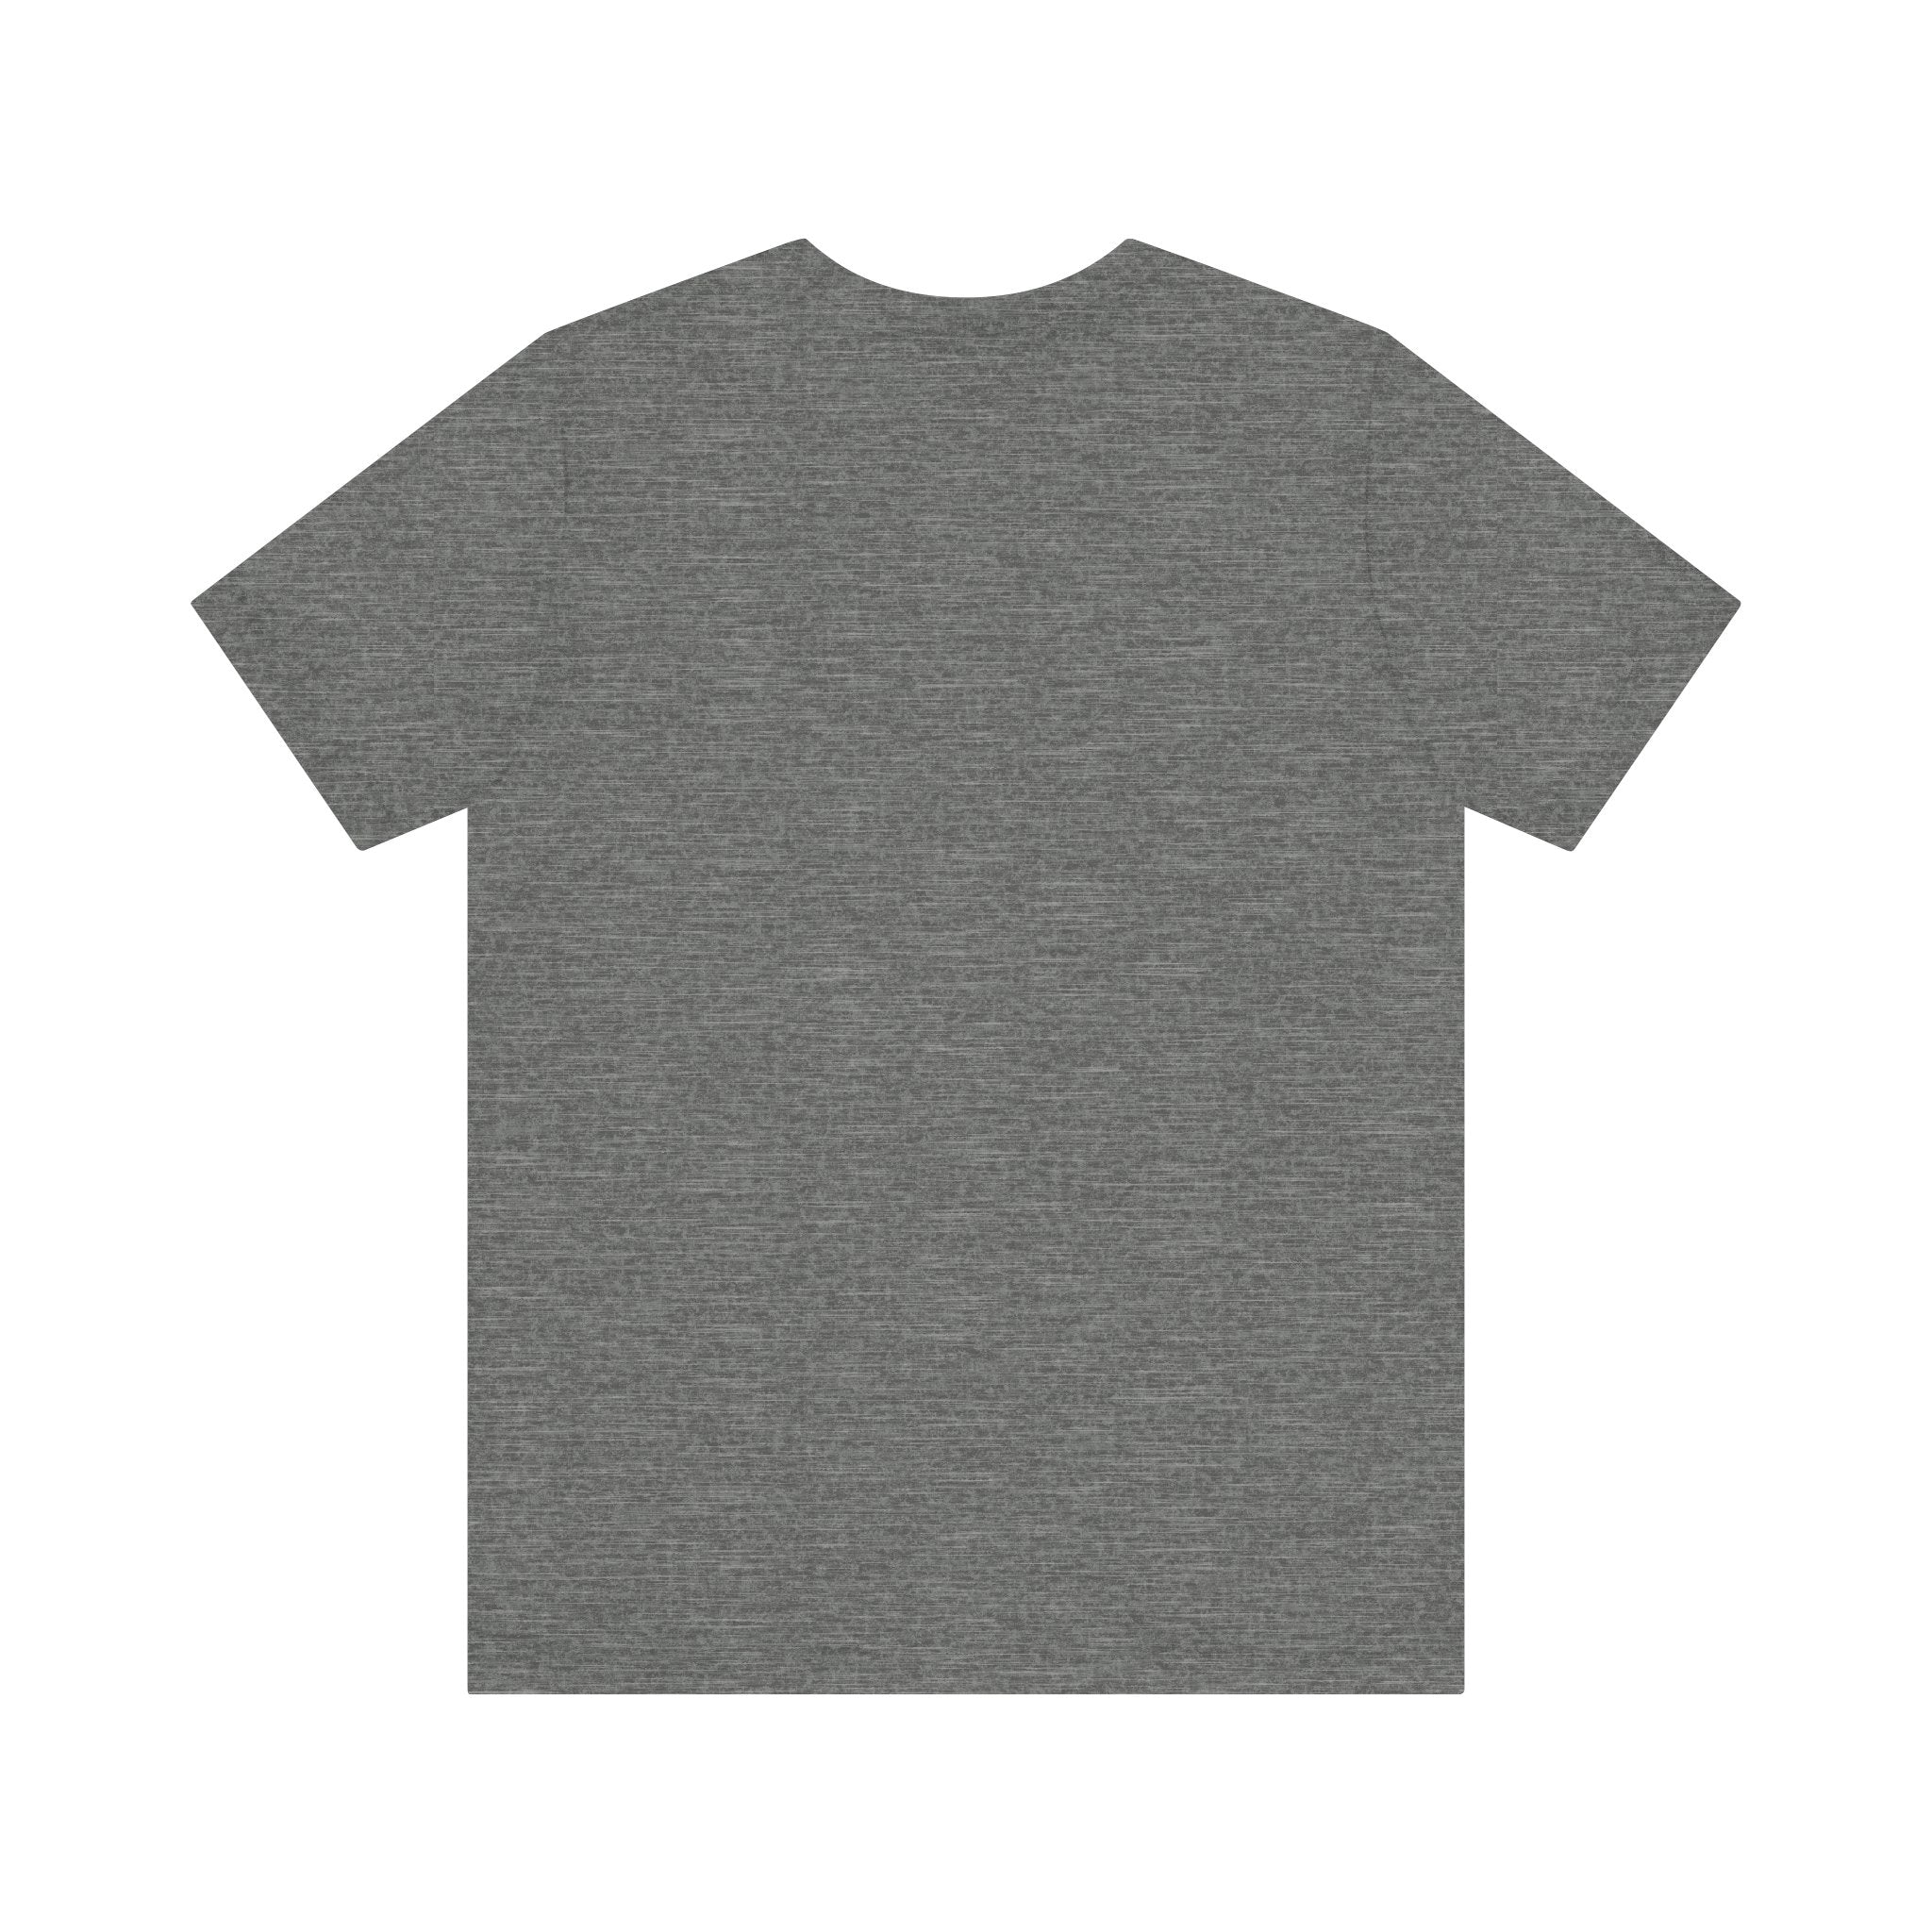 Grey surf t-shirt with white logo, direct-to-garment printed Soulshinecreators item